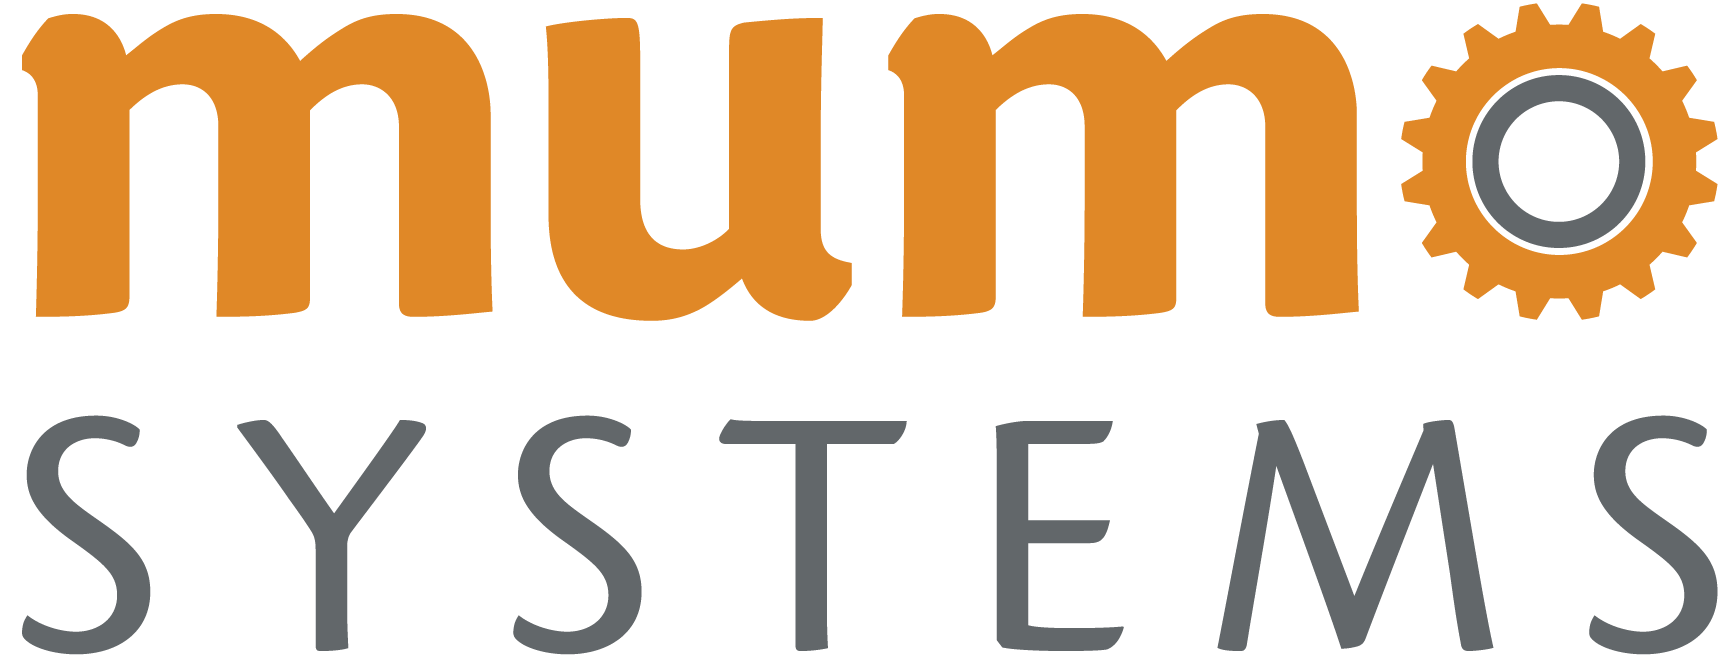 Mumo Systems logo